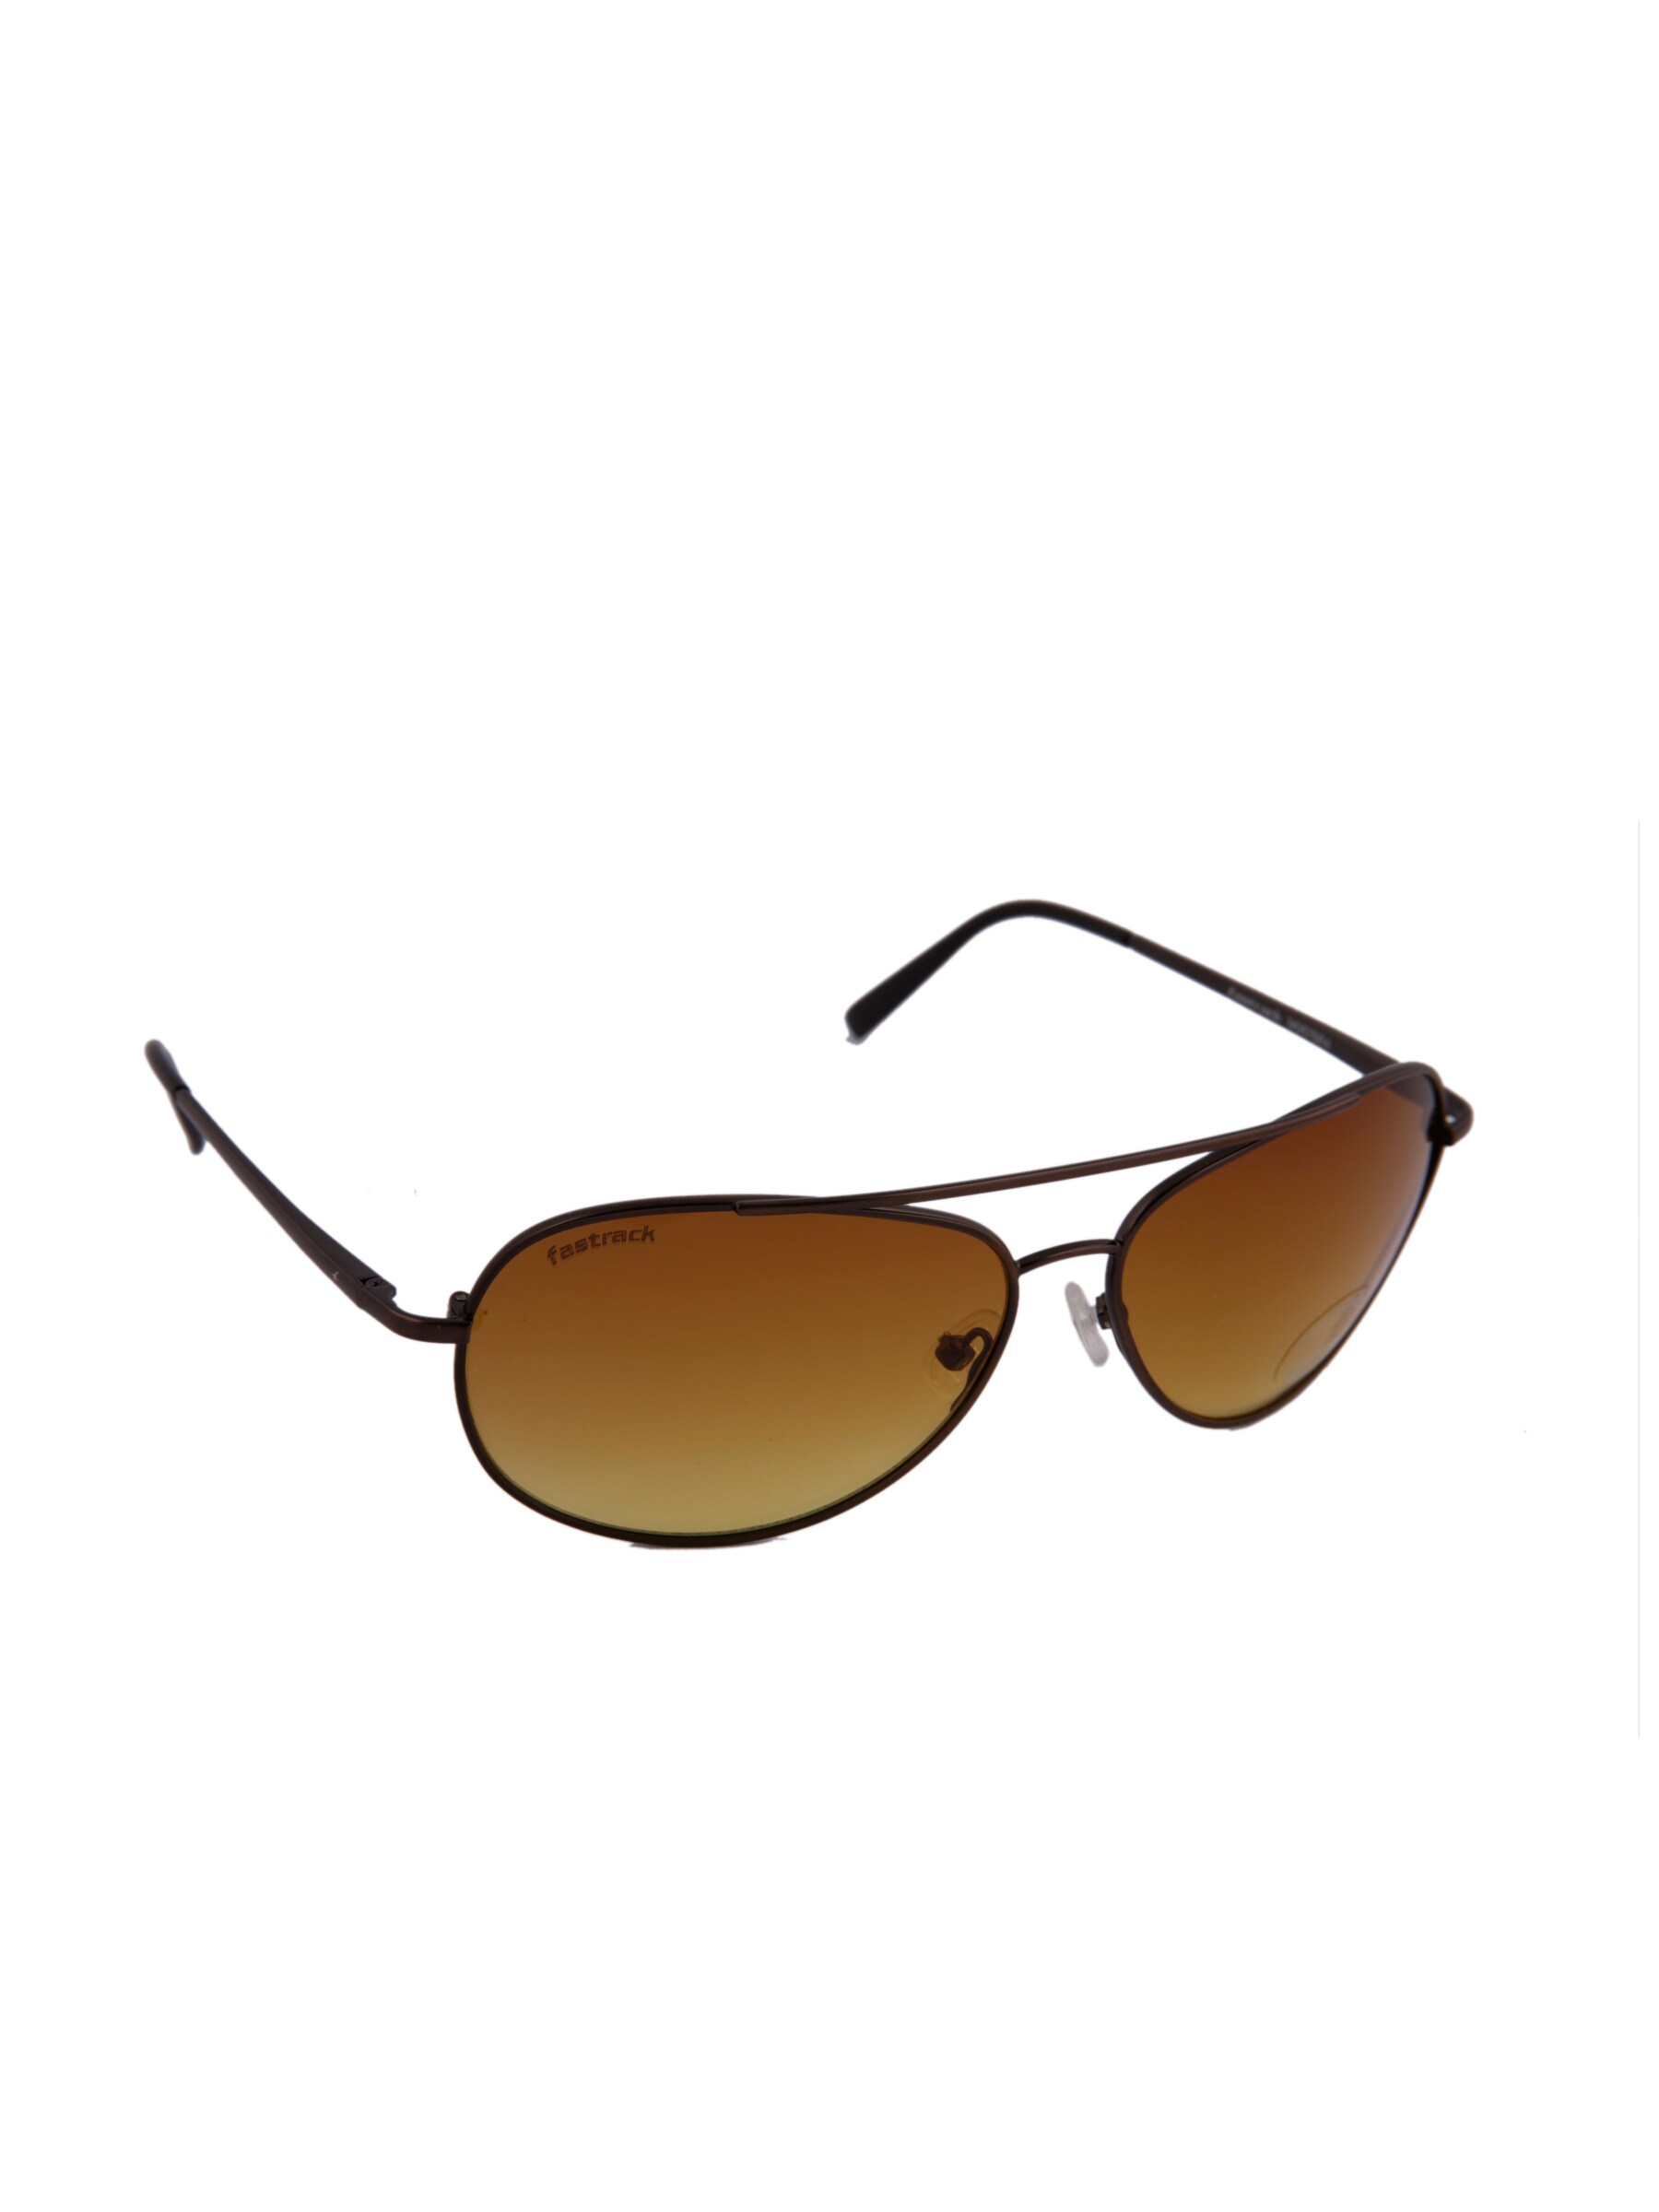 Fastrack Unisex Brown Sunglasses